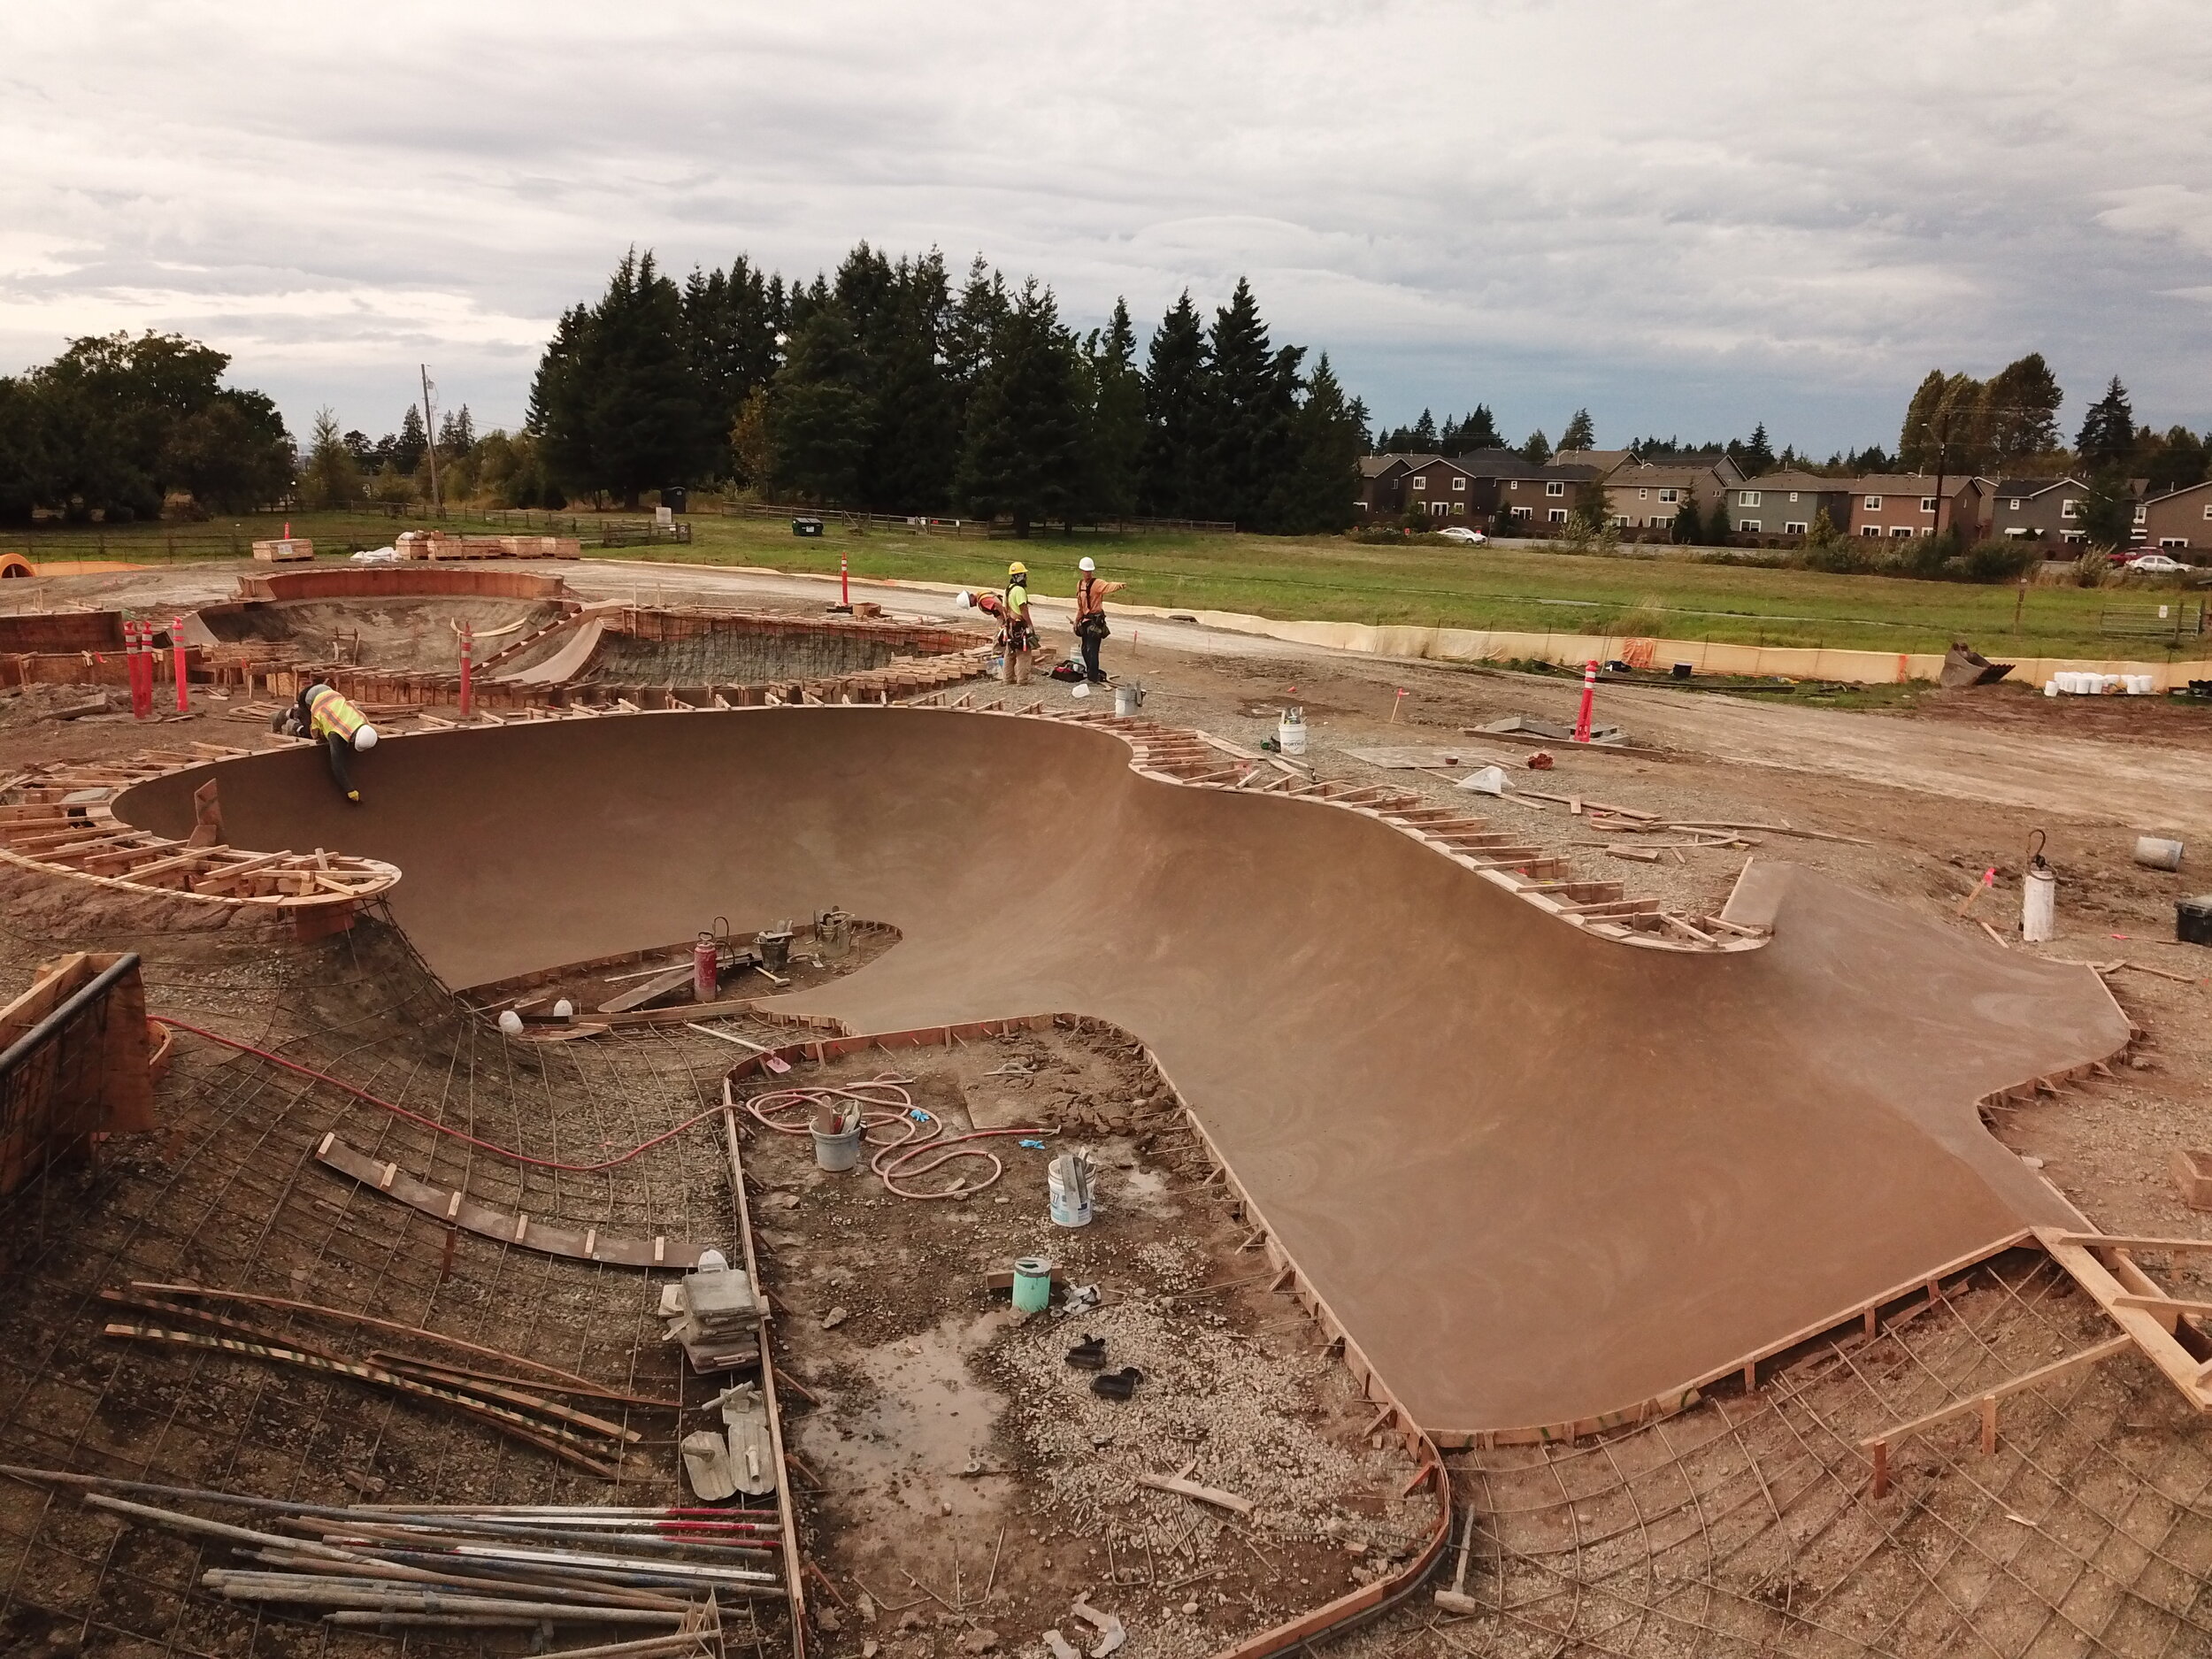 Earth tones 🌎 on this large concrete pour. Lake Stevens, Washington